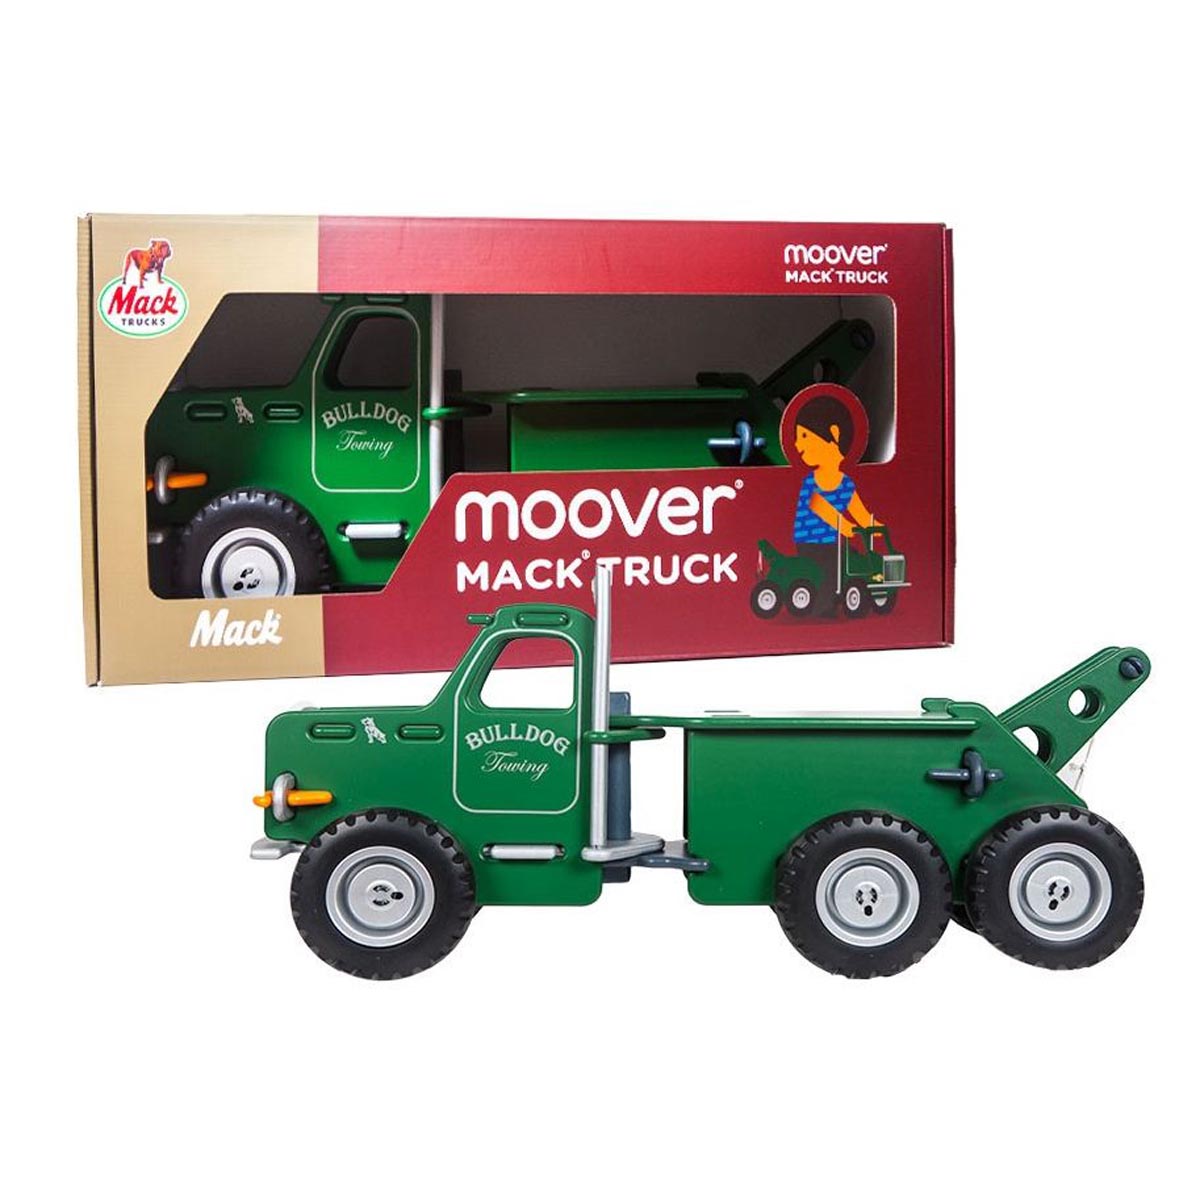 Moover Mack Truck Green